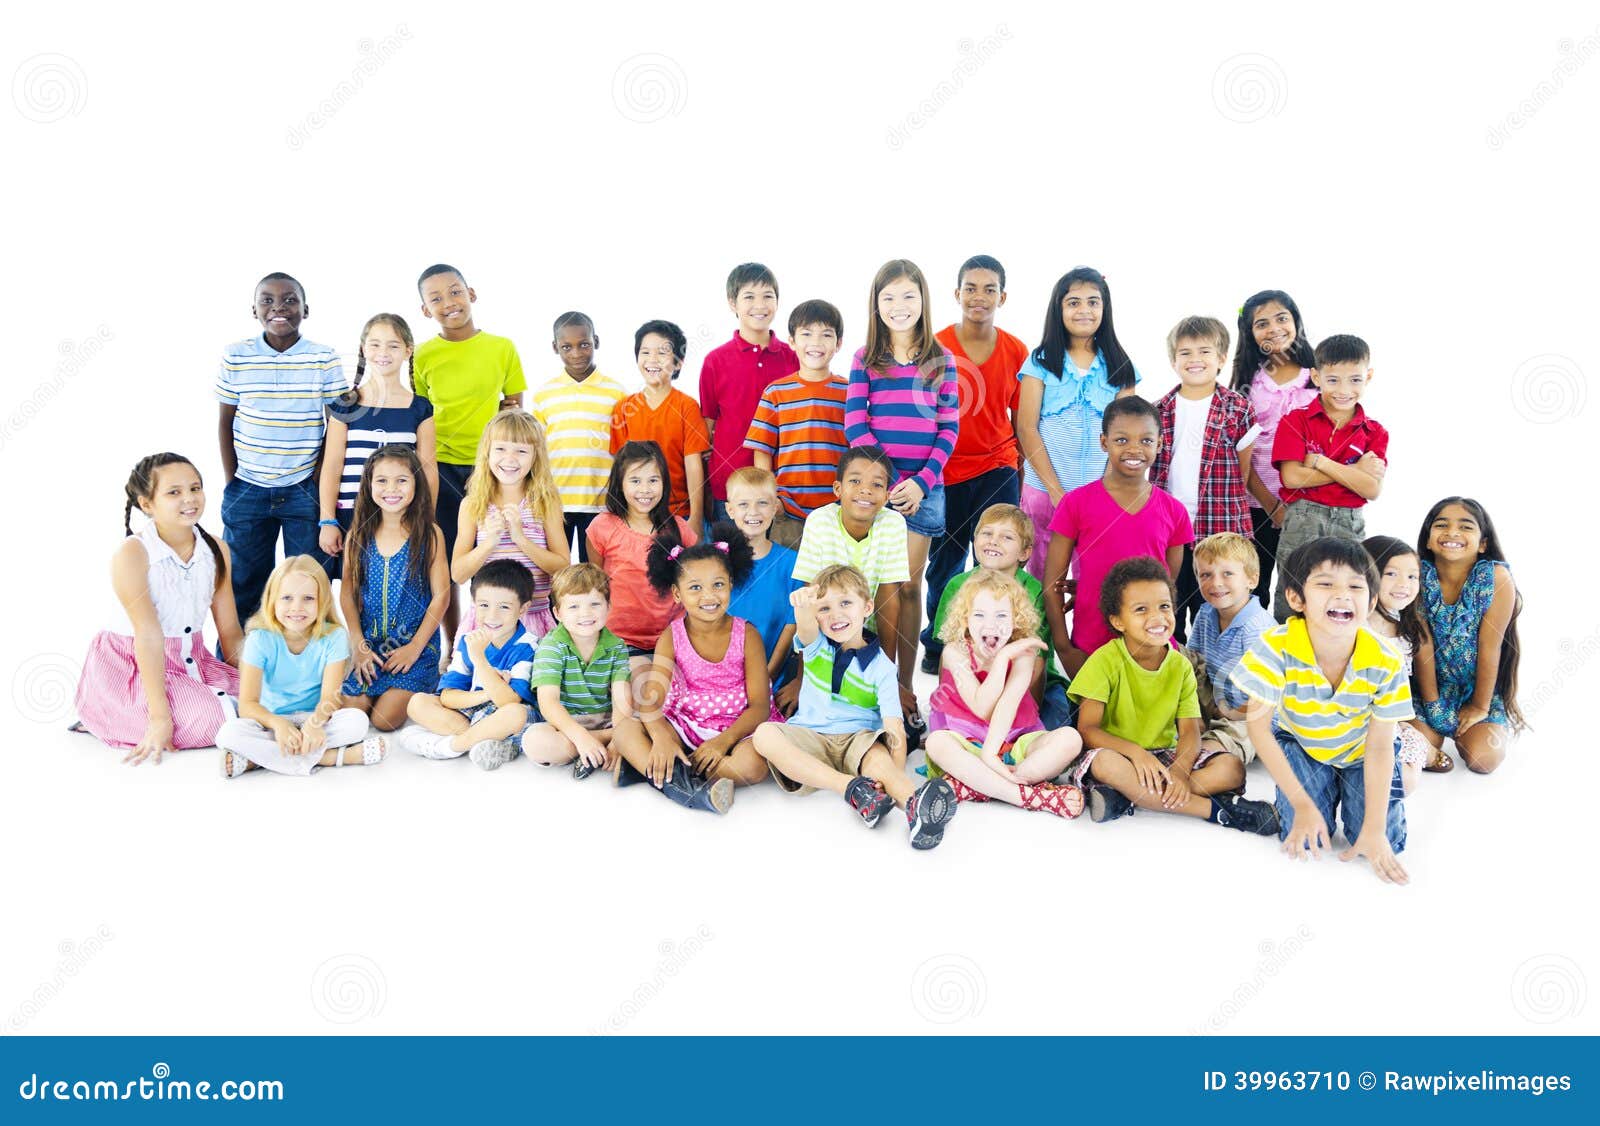 multi-ethnic children in casual wear